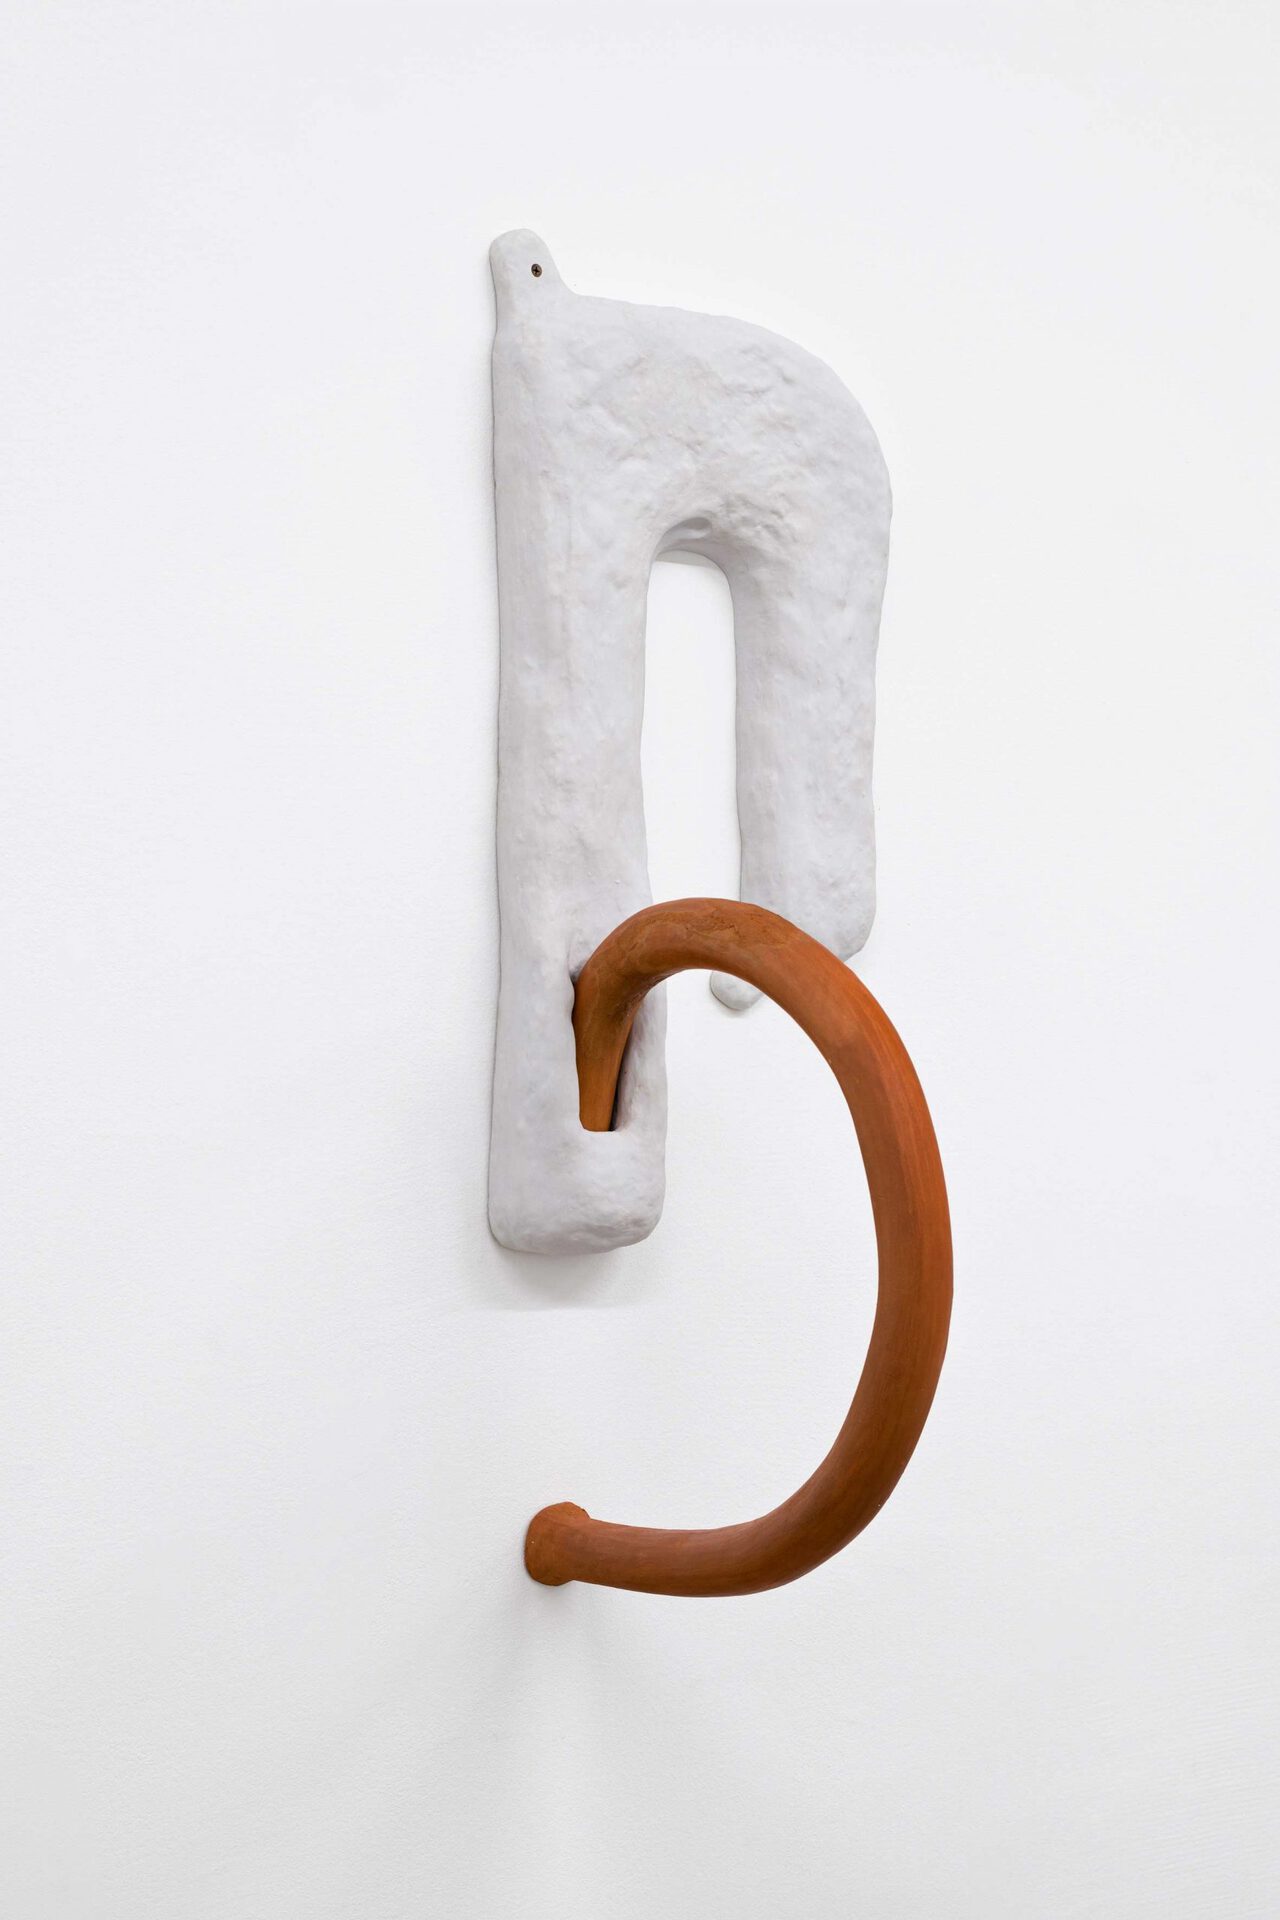 Phanos Kyriacou, Common Handles, 2021, terracotta, cast polyurethane resin, stainless steel, 172 x 35 x 40 cm.